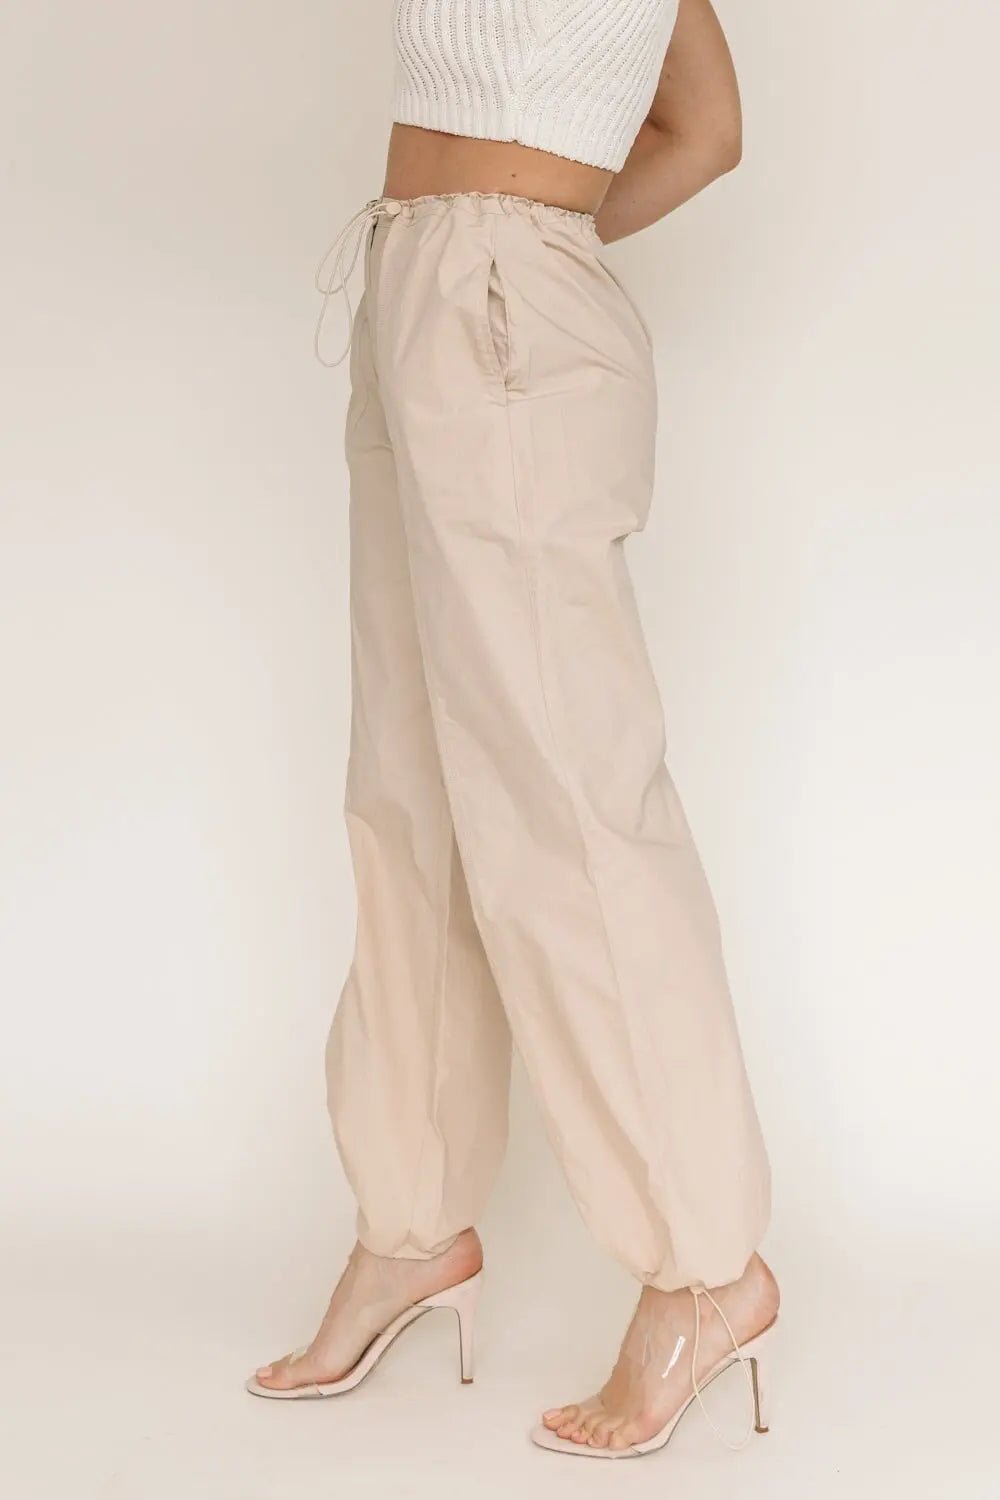 Style Swap Khaki Parachute Pants - JO+CO